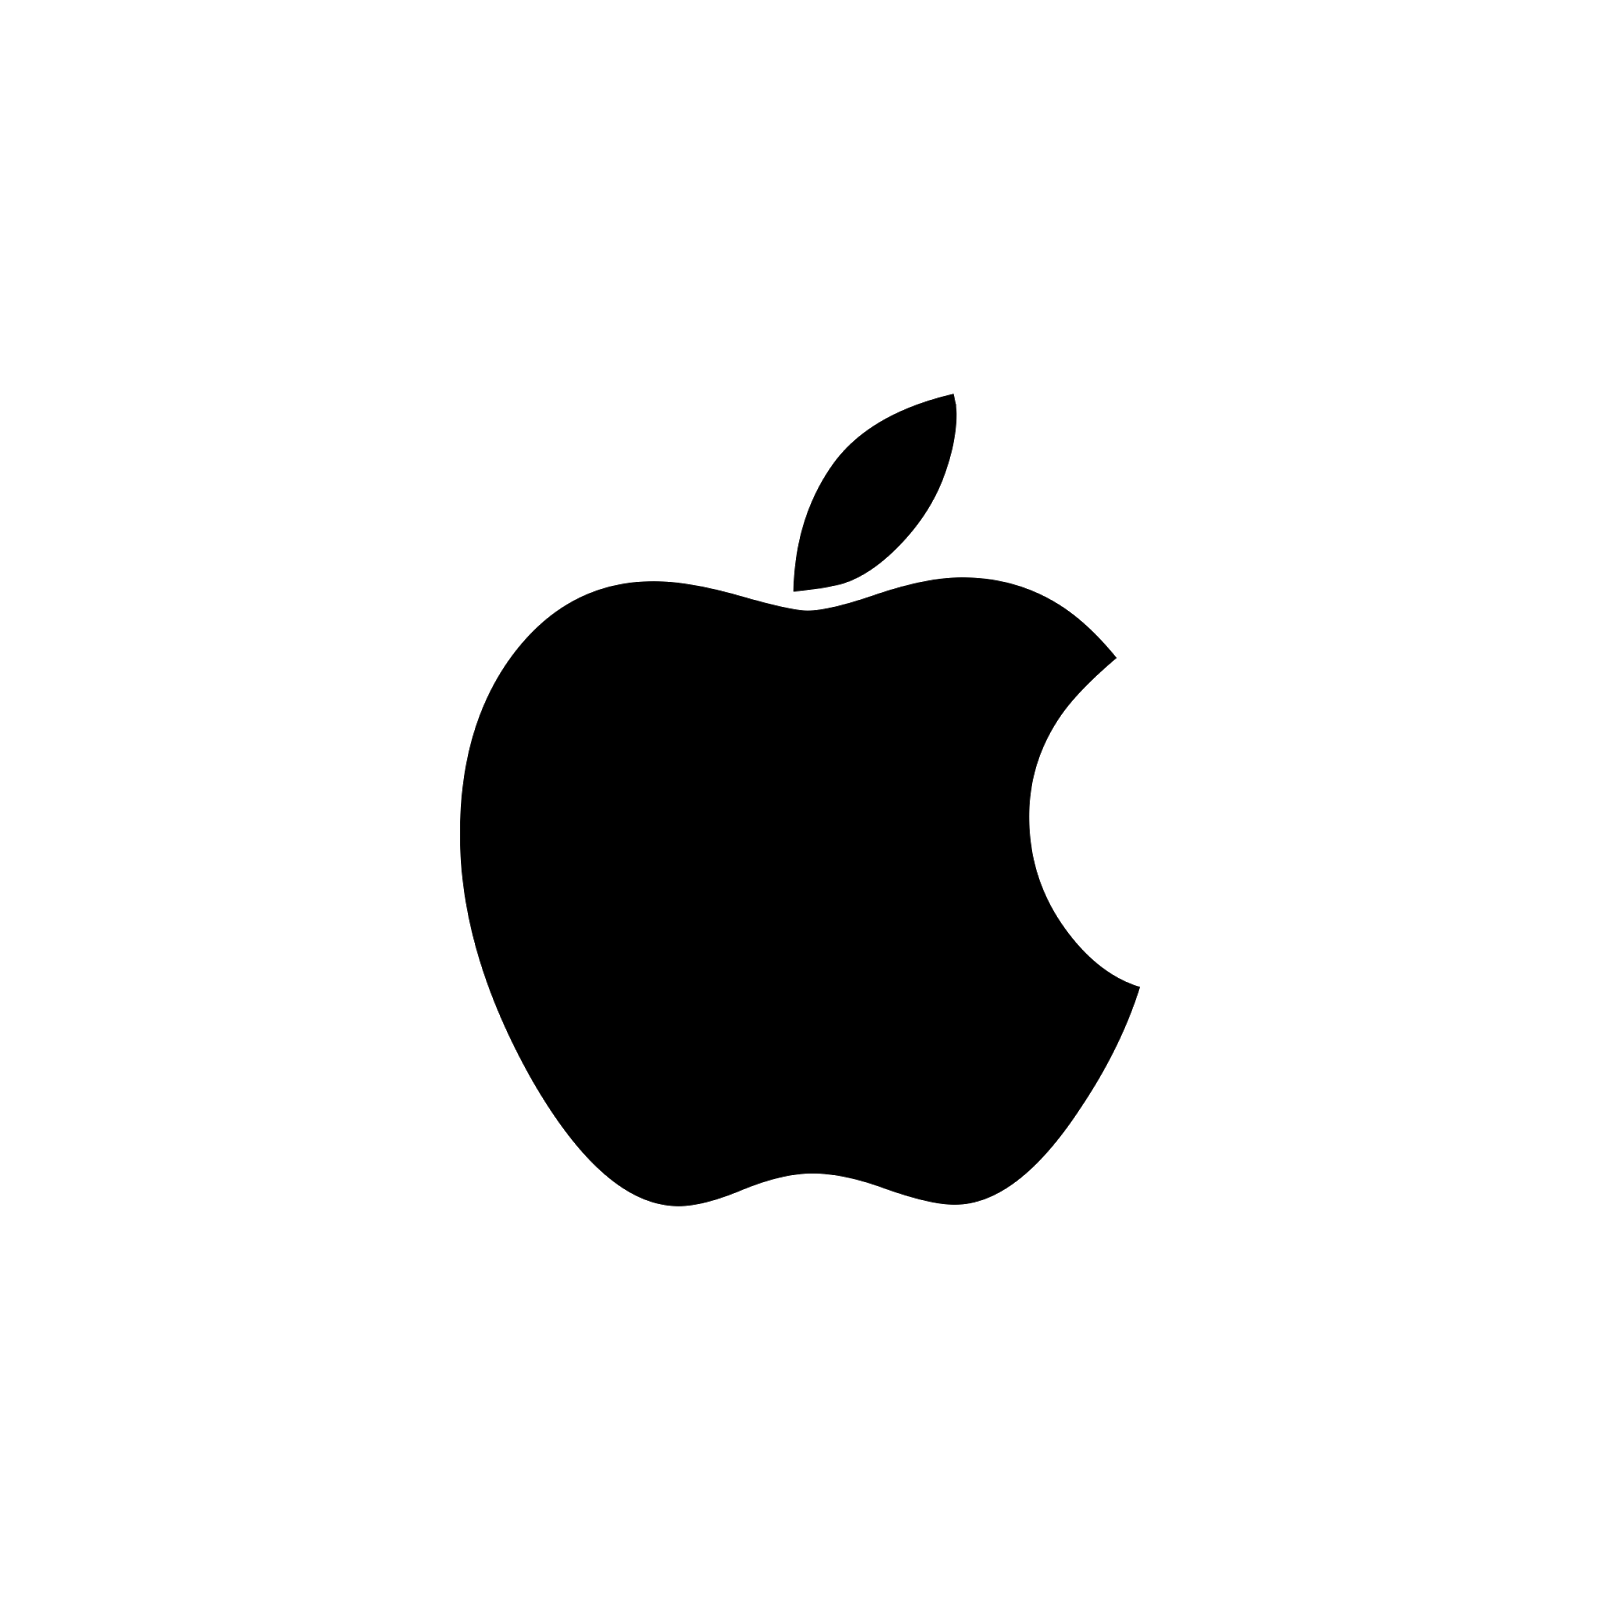 AAPL Logo - Apple Inc. $AAPL Stock. Apple Earnings Beat Wall Street's